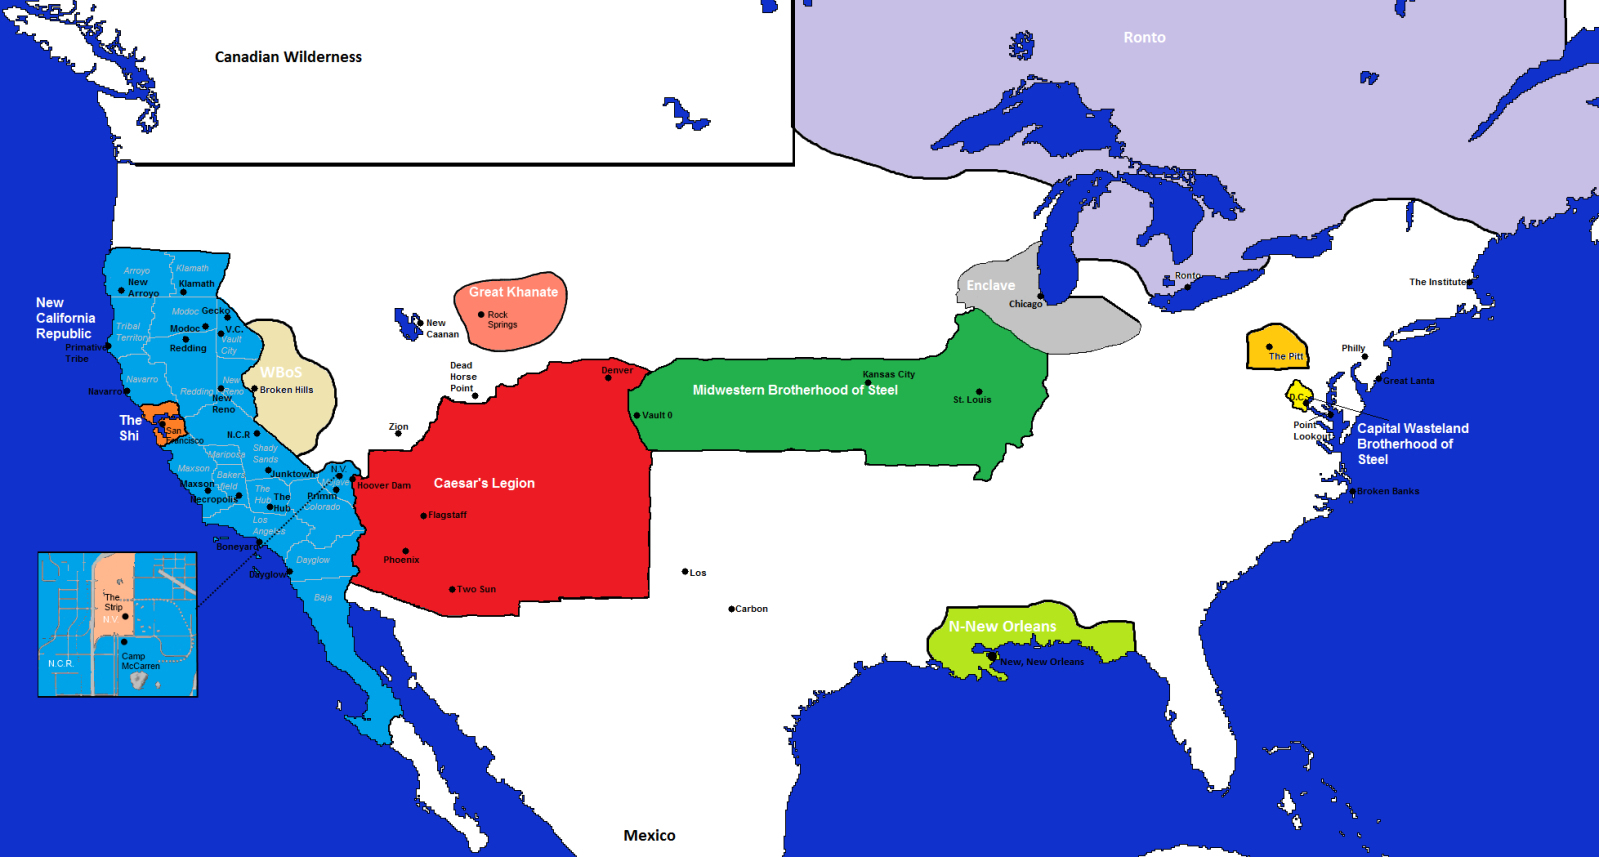 New California Republic Map - Klipy - Map Of The New California Republic